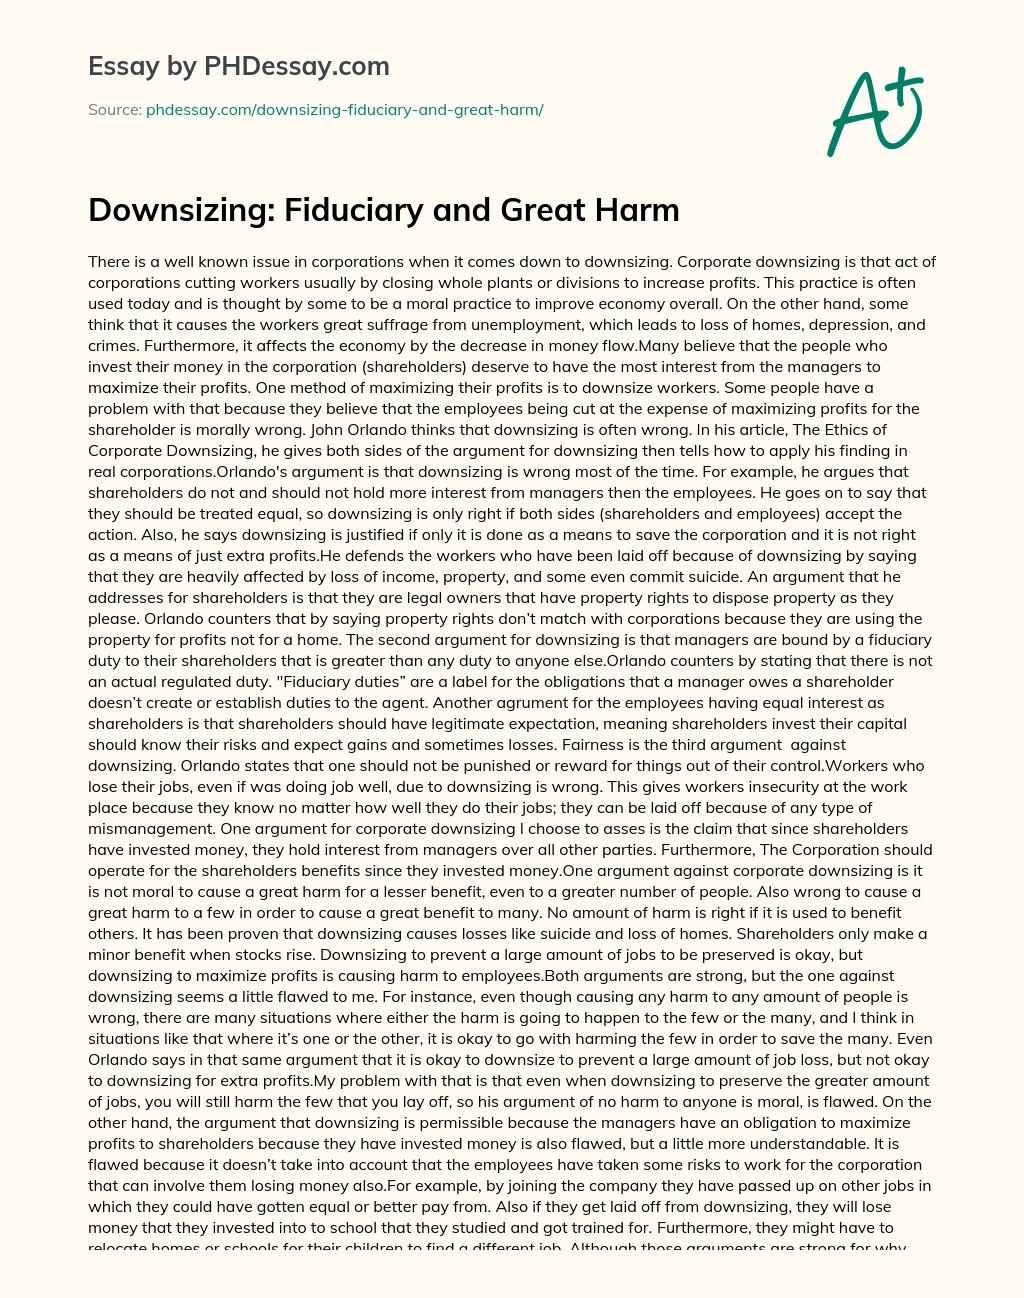 Downsizing: Fiduciary and Great Harm essay